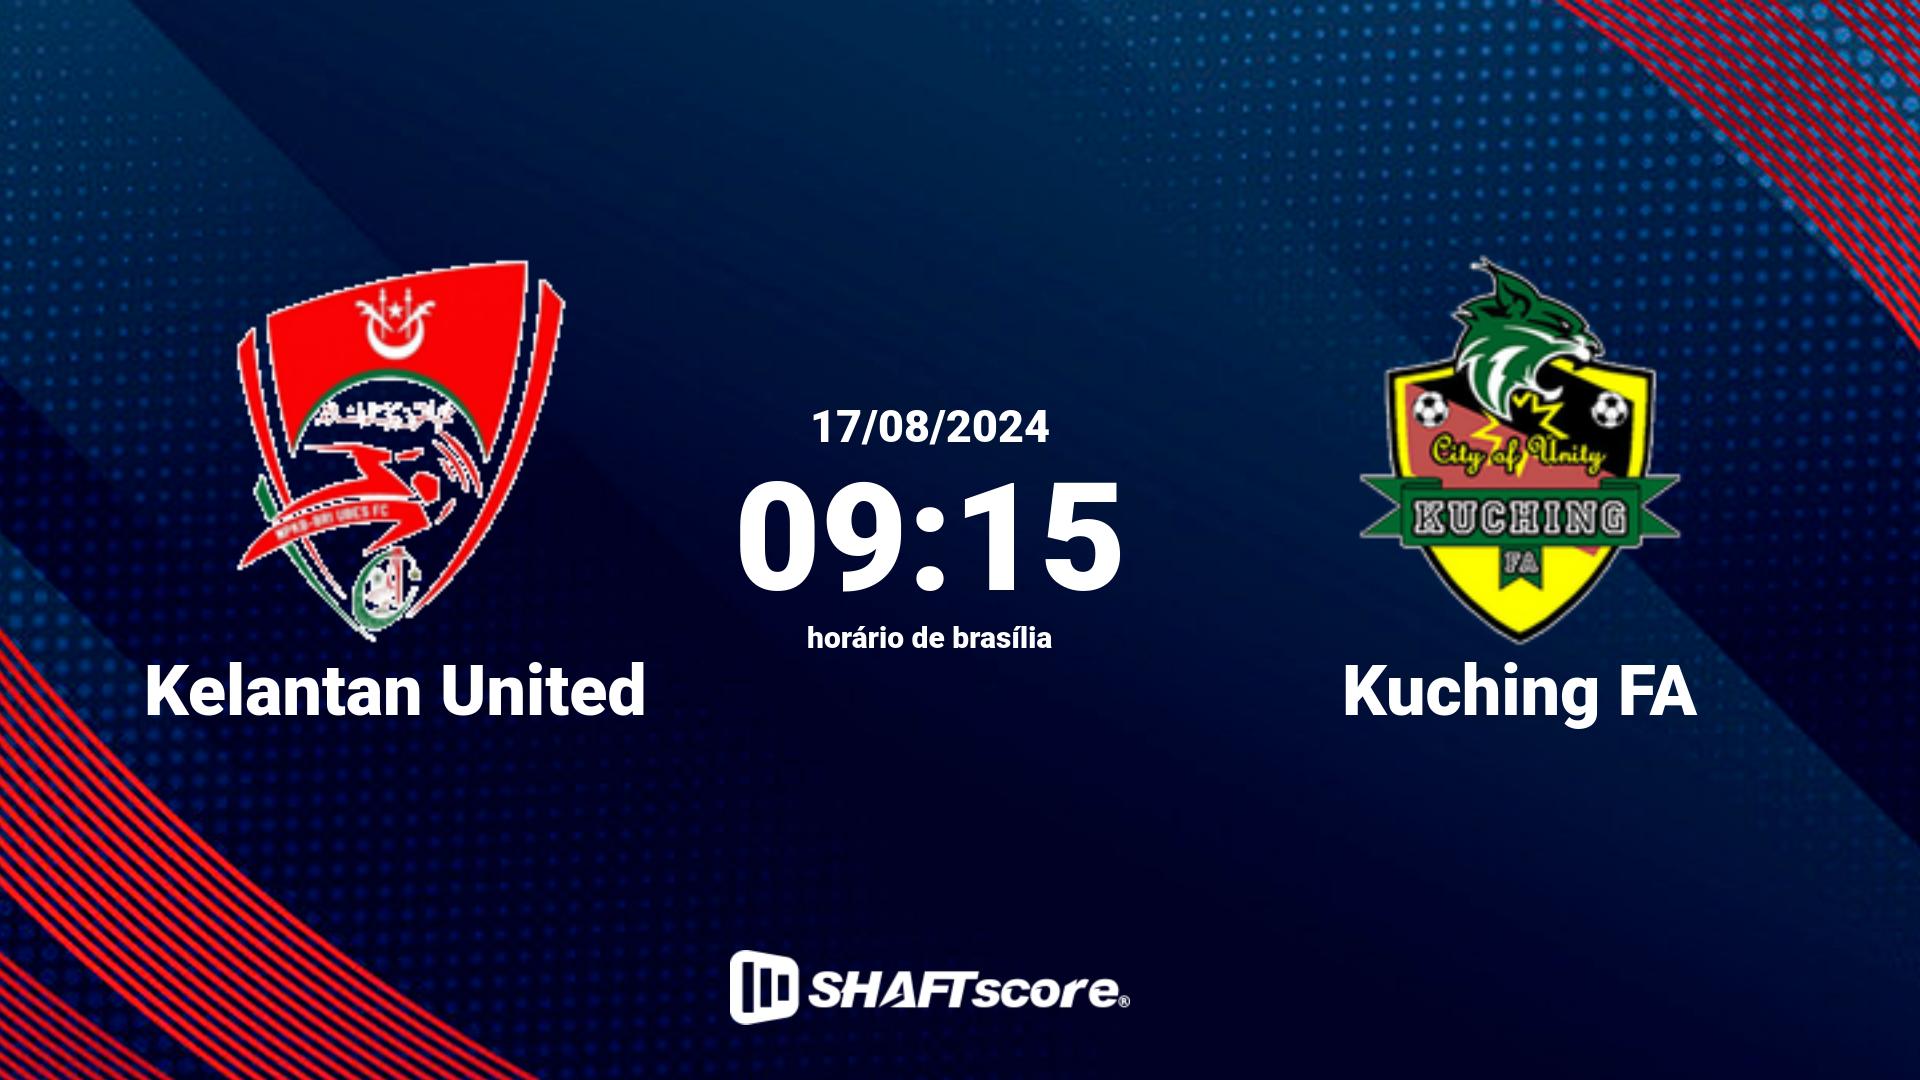 Estatísticas do jogo Kelantan United vs Kuching FA 17.08 09:15